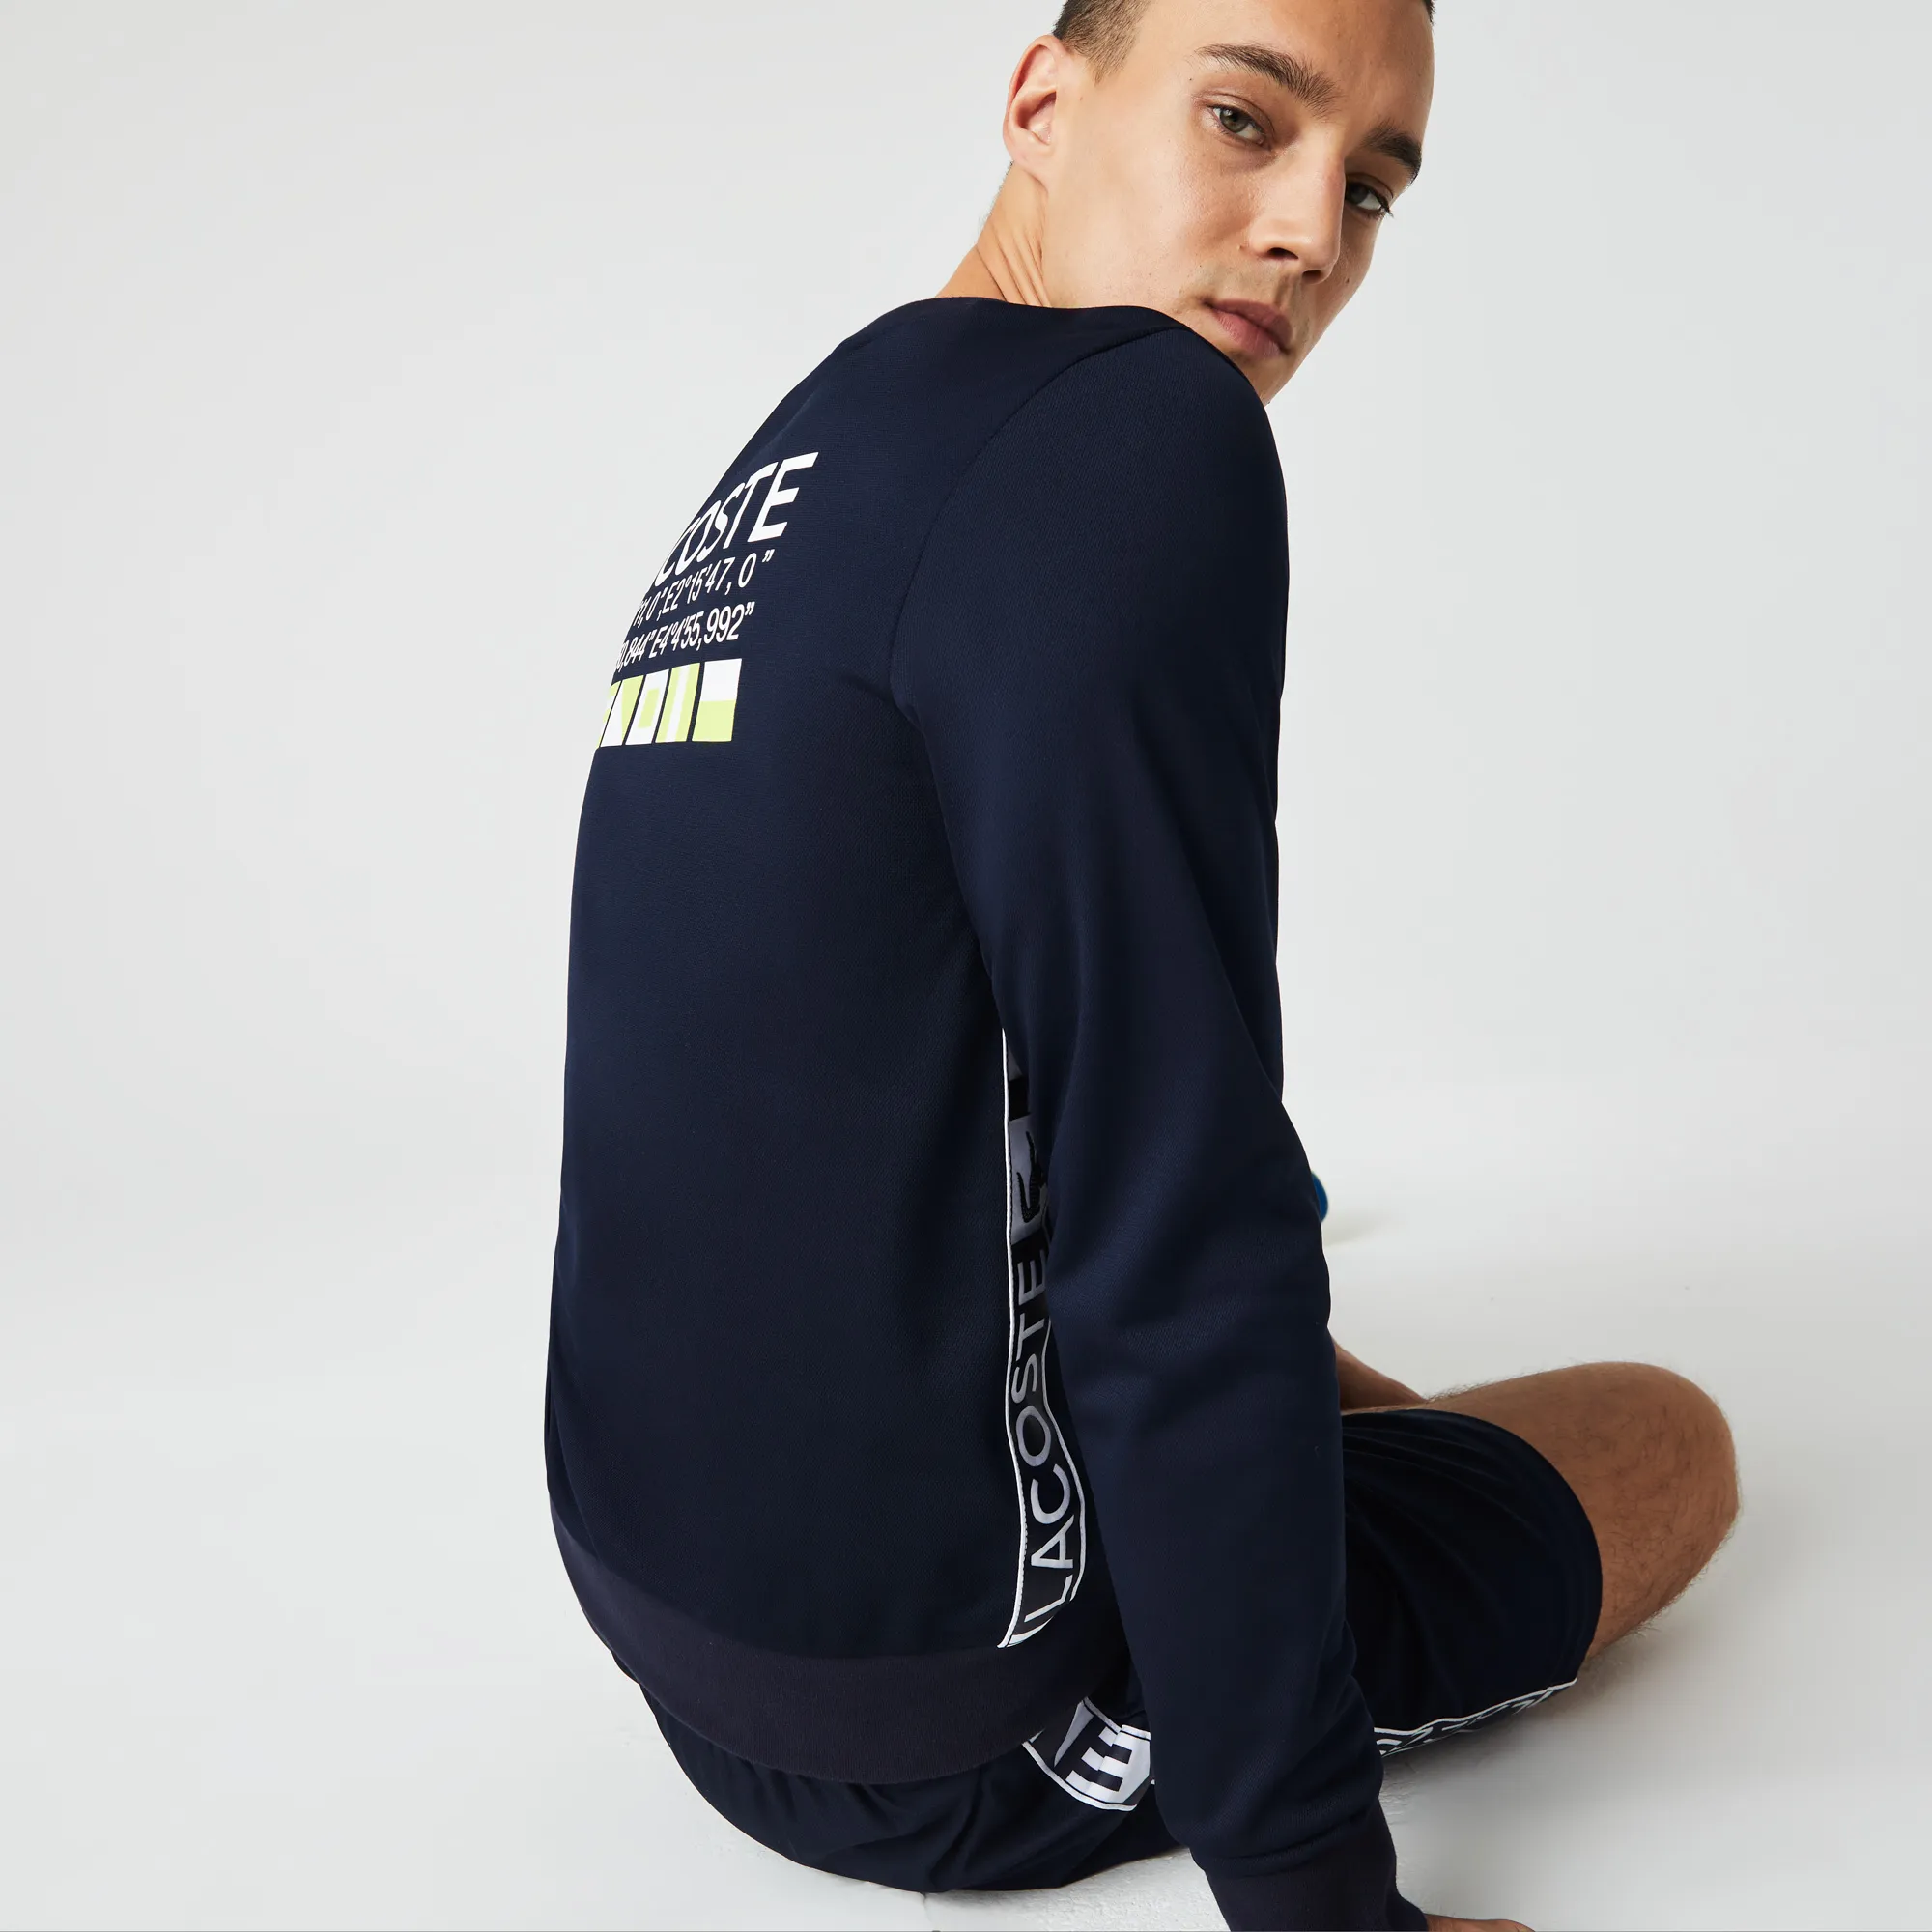 Men’s Lacoste SPORT Printed Tennis Sweatshirt